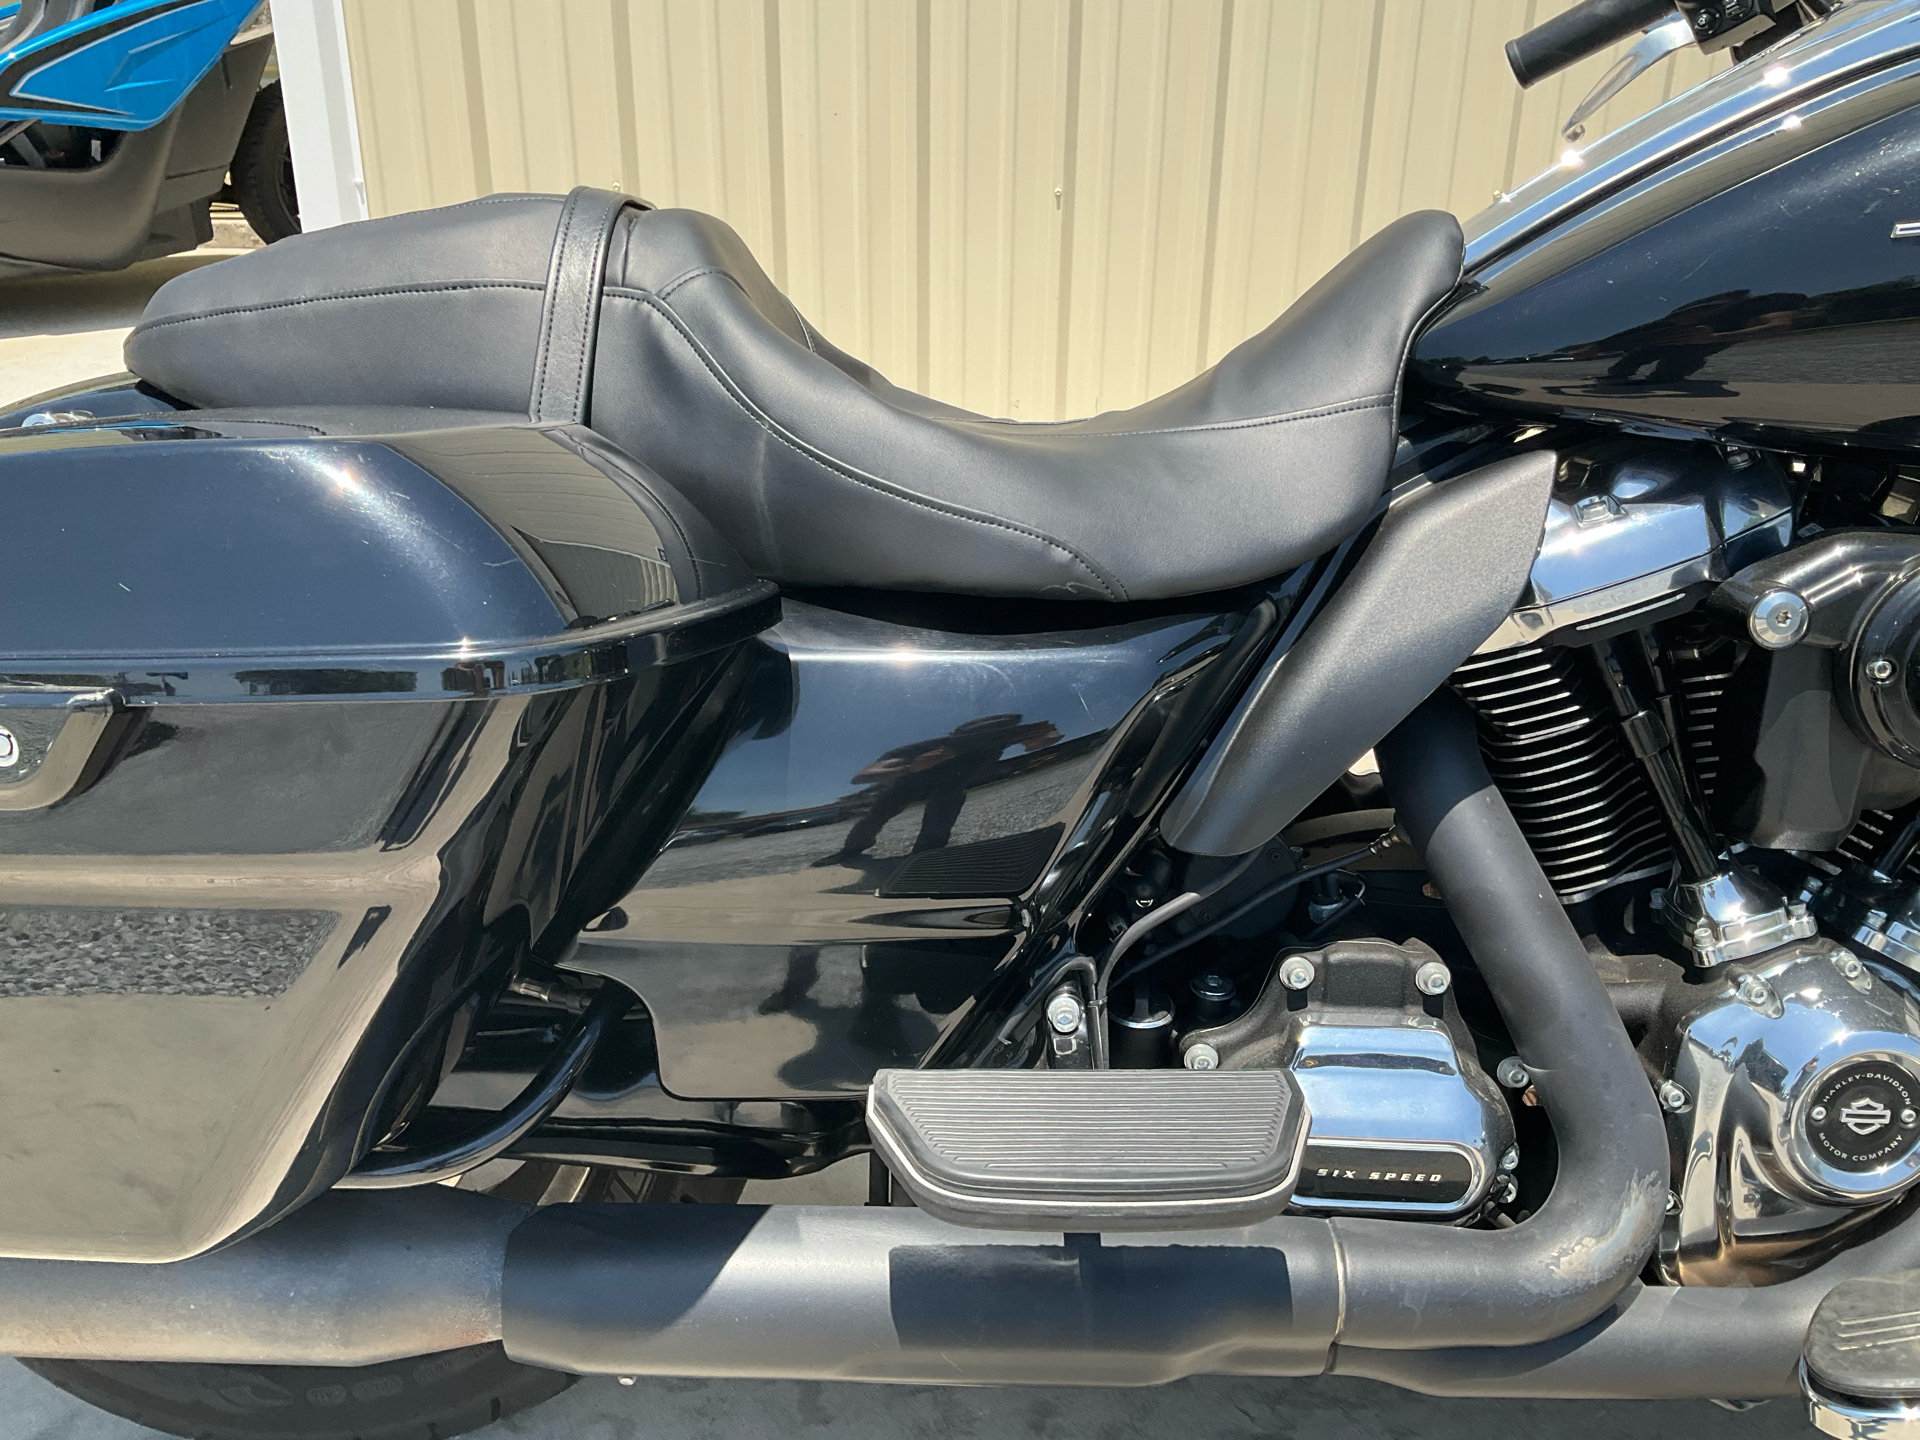 2017 Harley-Davidson Street Glide® Special in Sanford, Florida - Photo 8